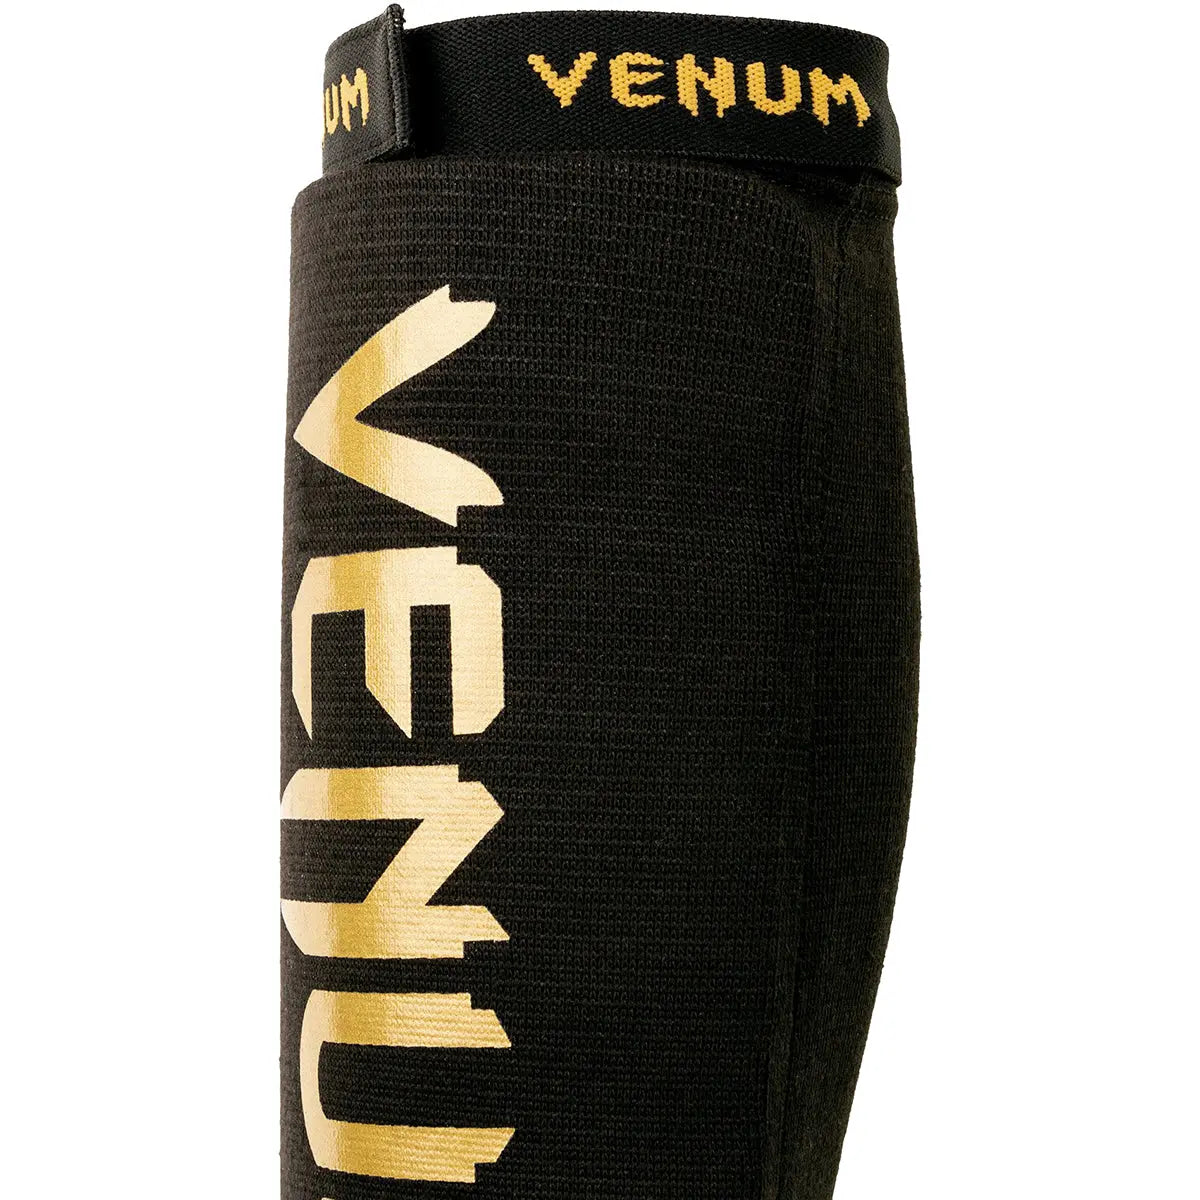 Venum Kontact Protective MMA Shin Guards - Black/Gold Venum